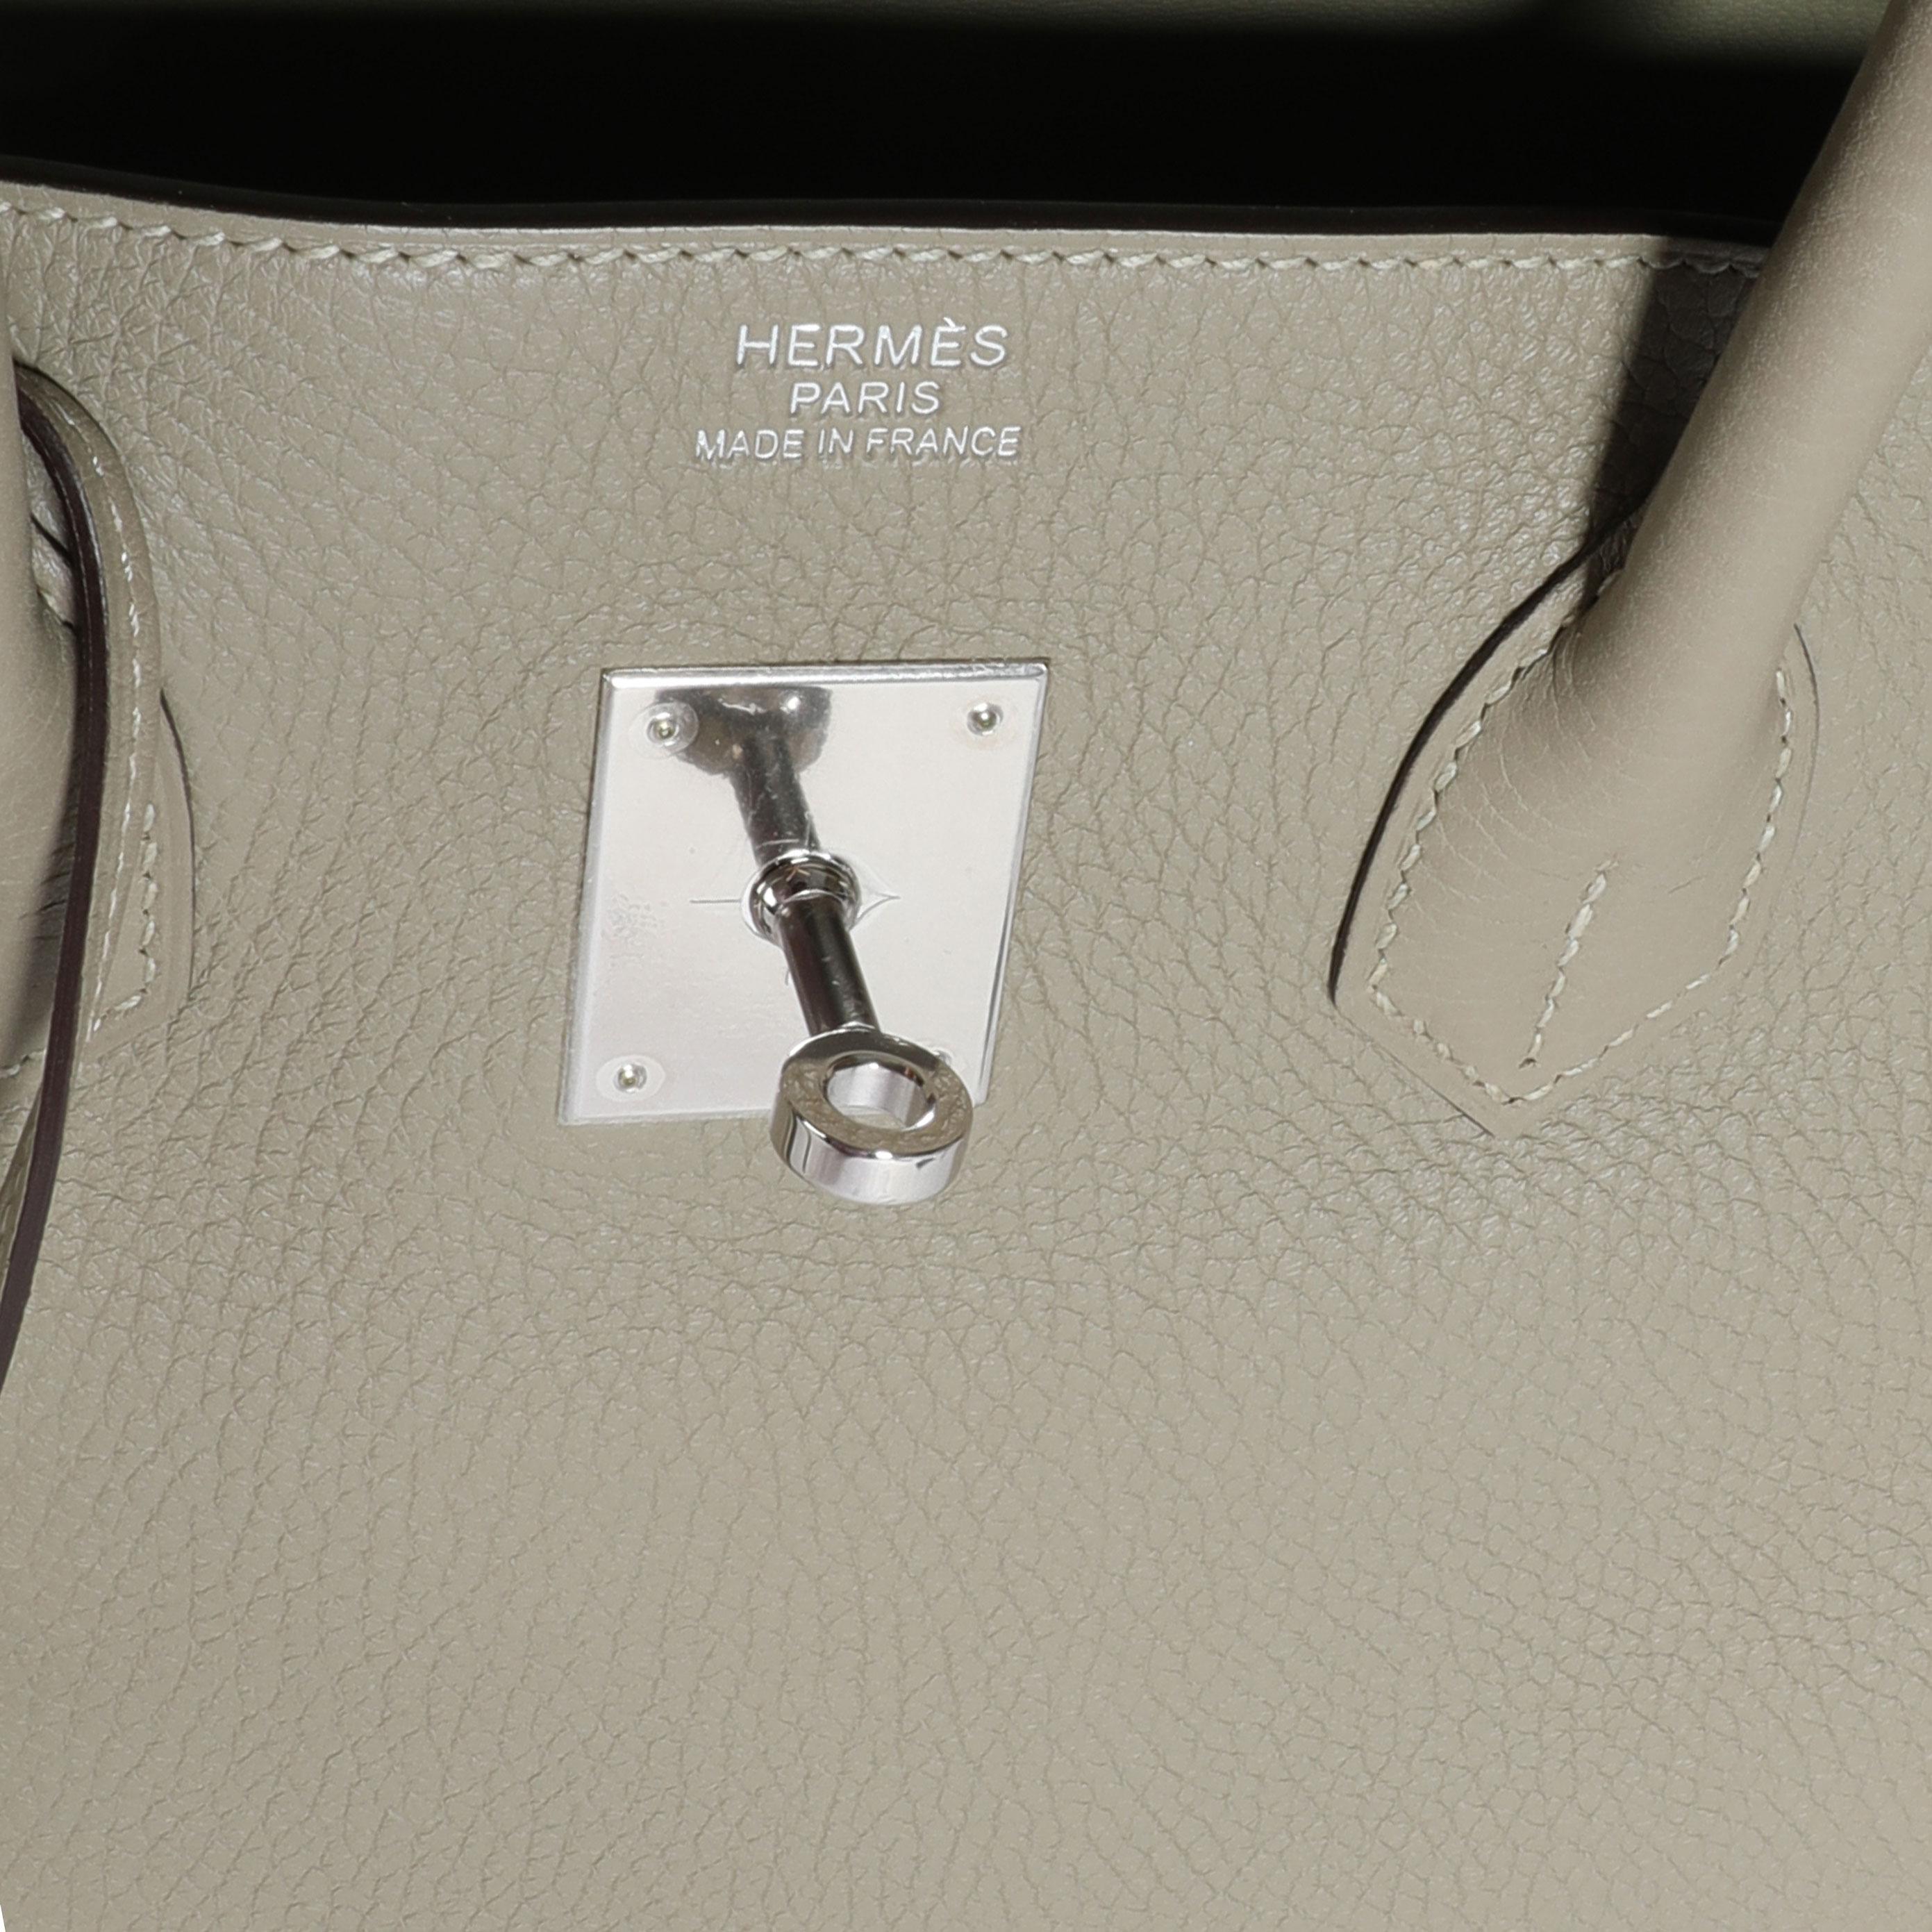 Hermès Sauge Clémence Birkin 35 PHW
SKU: 110983

Handbag Condition: Very Good
Condition Comments: Very Good Condition. Plastic on some hardware. Faint scuffing to corners.
Brand: Hermès
Model: Birkin
Origin Country: France
Handbag Silhouette: Top